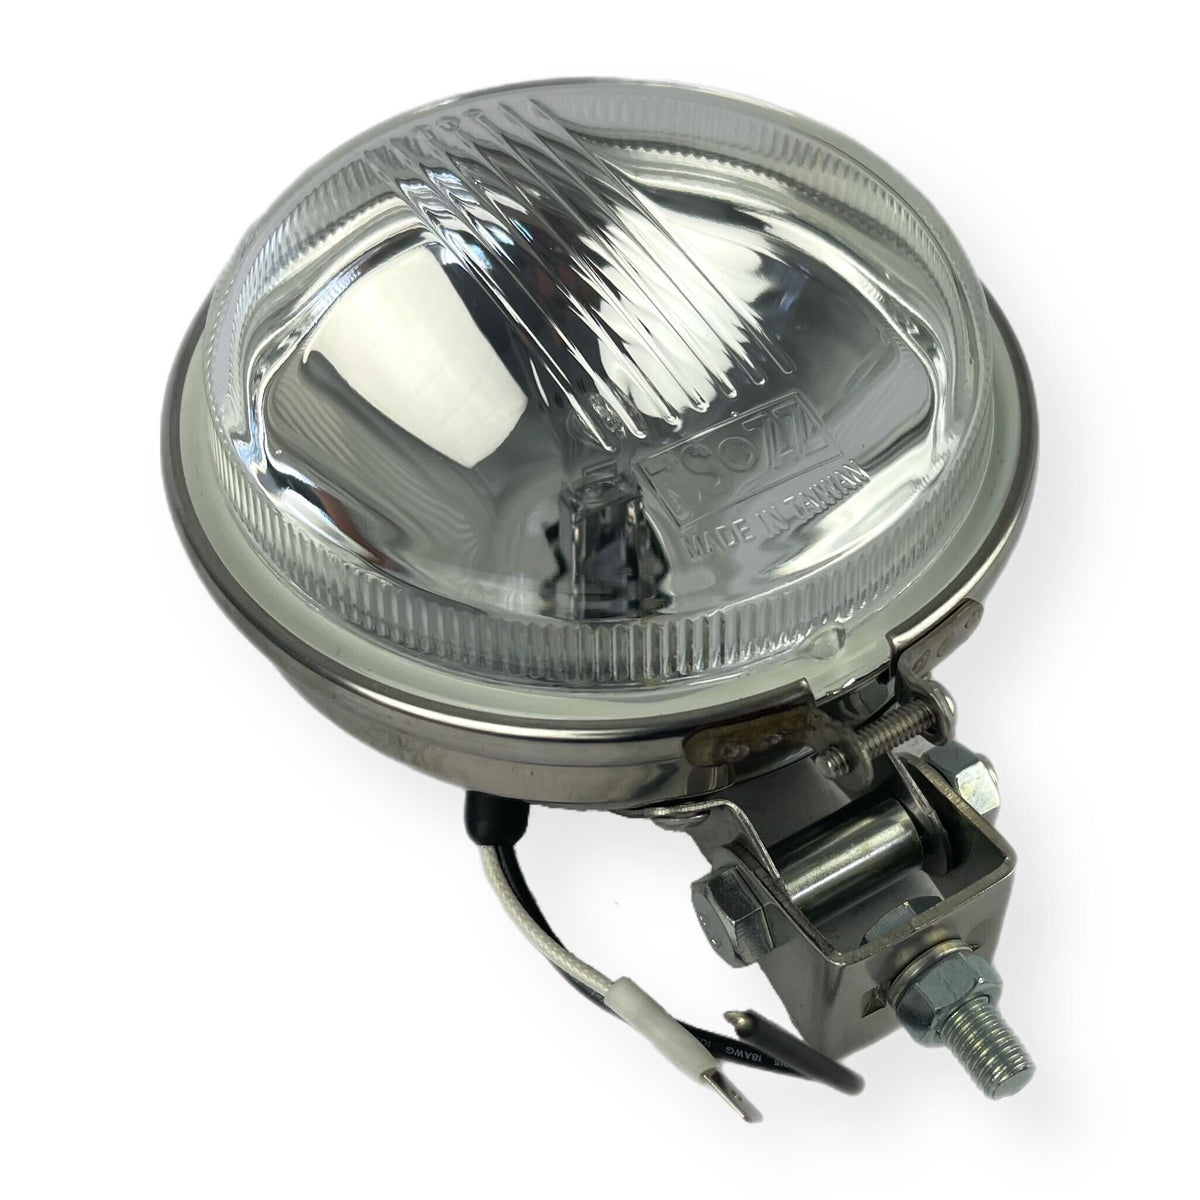 Vespa Lambretta Scooter Clear Spot Light Lamp Flat Backed Stainless Steel 110mm 12V 55W